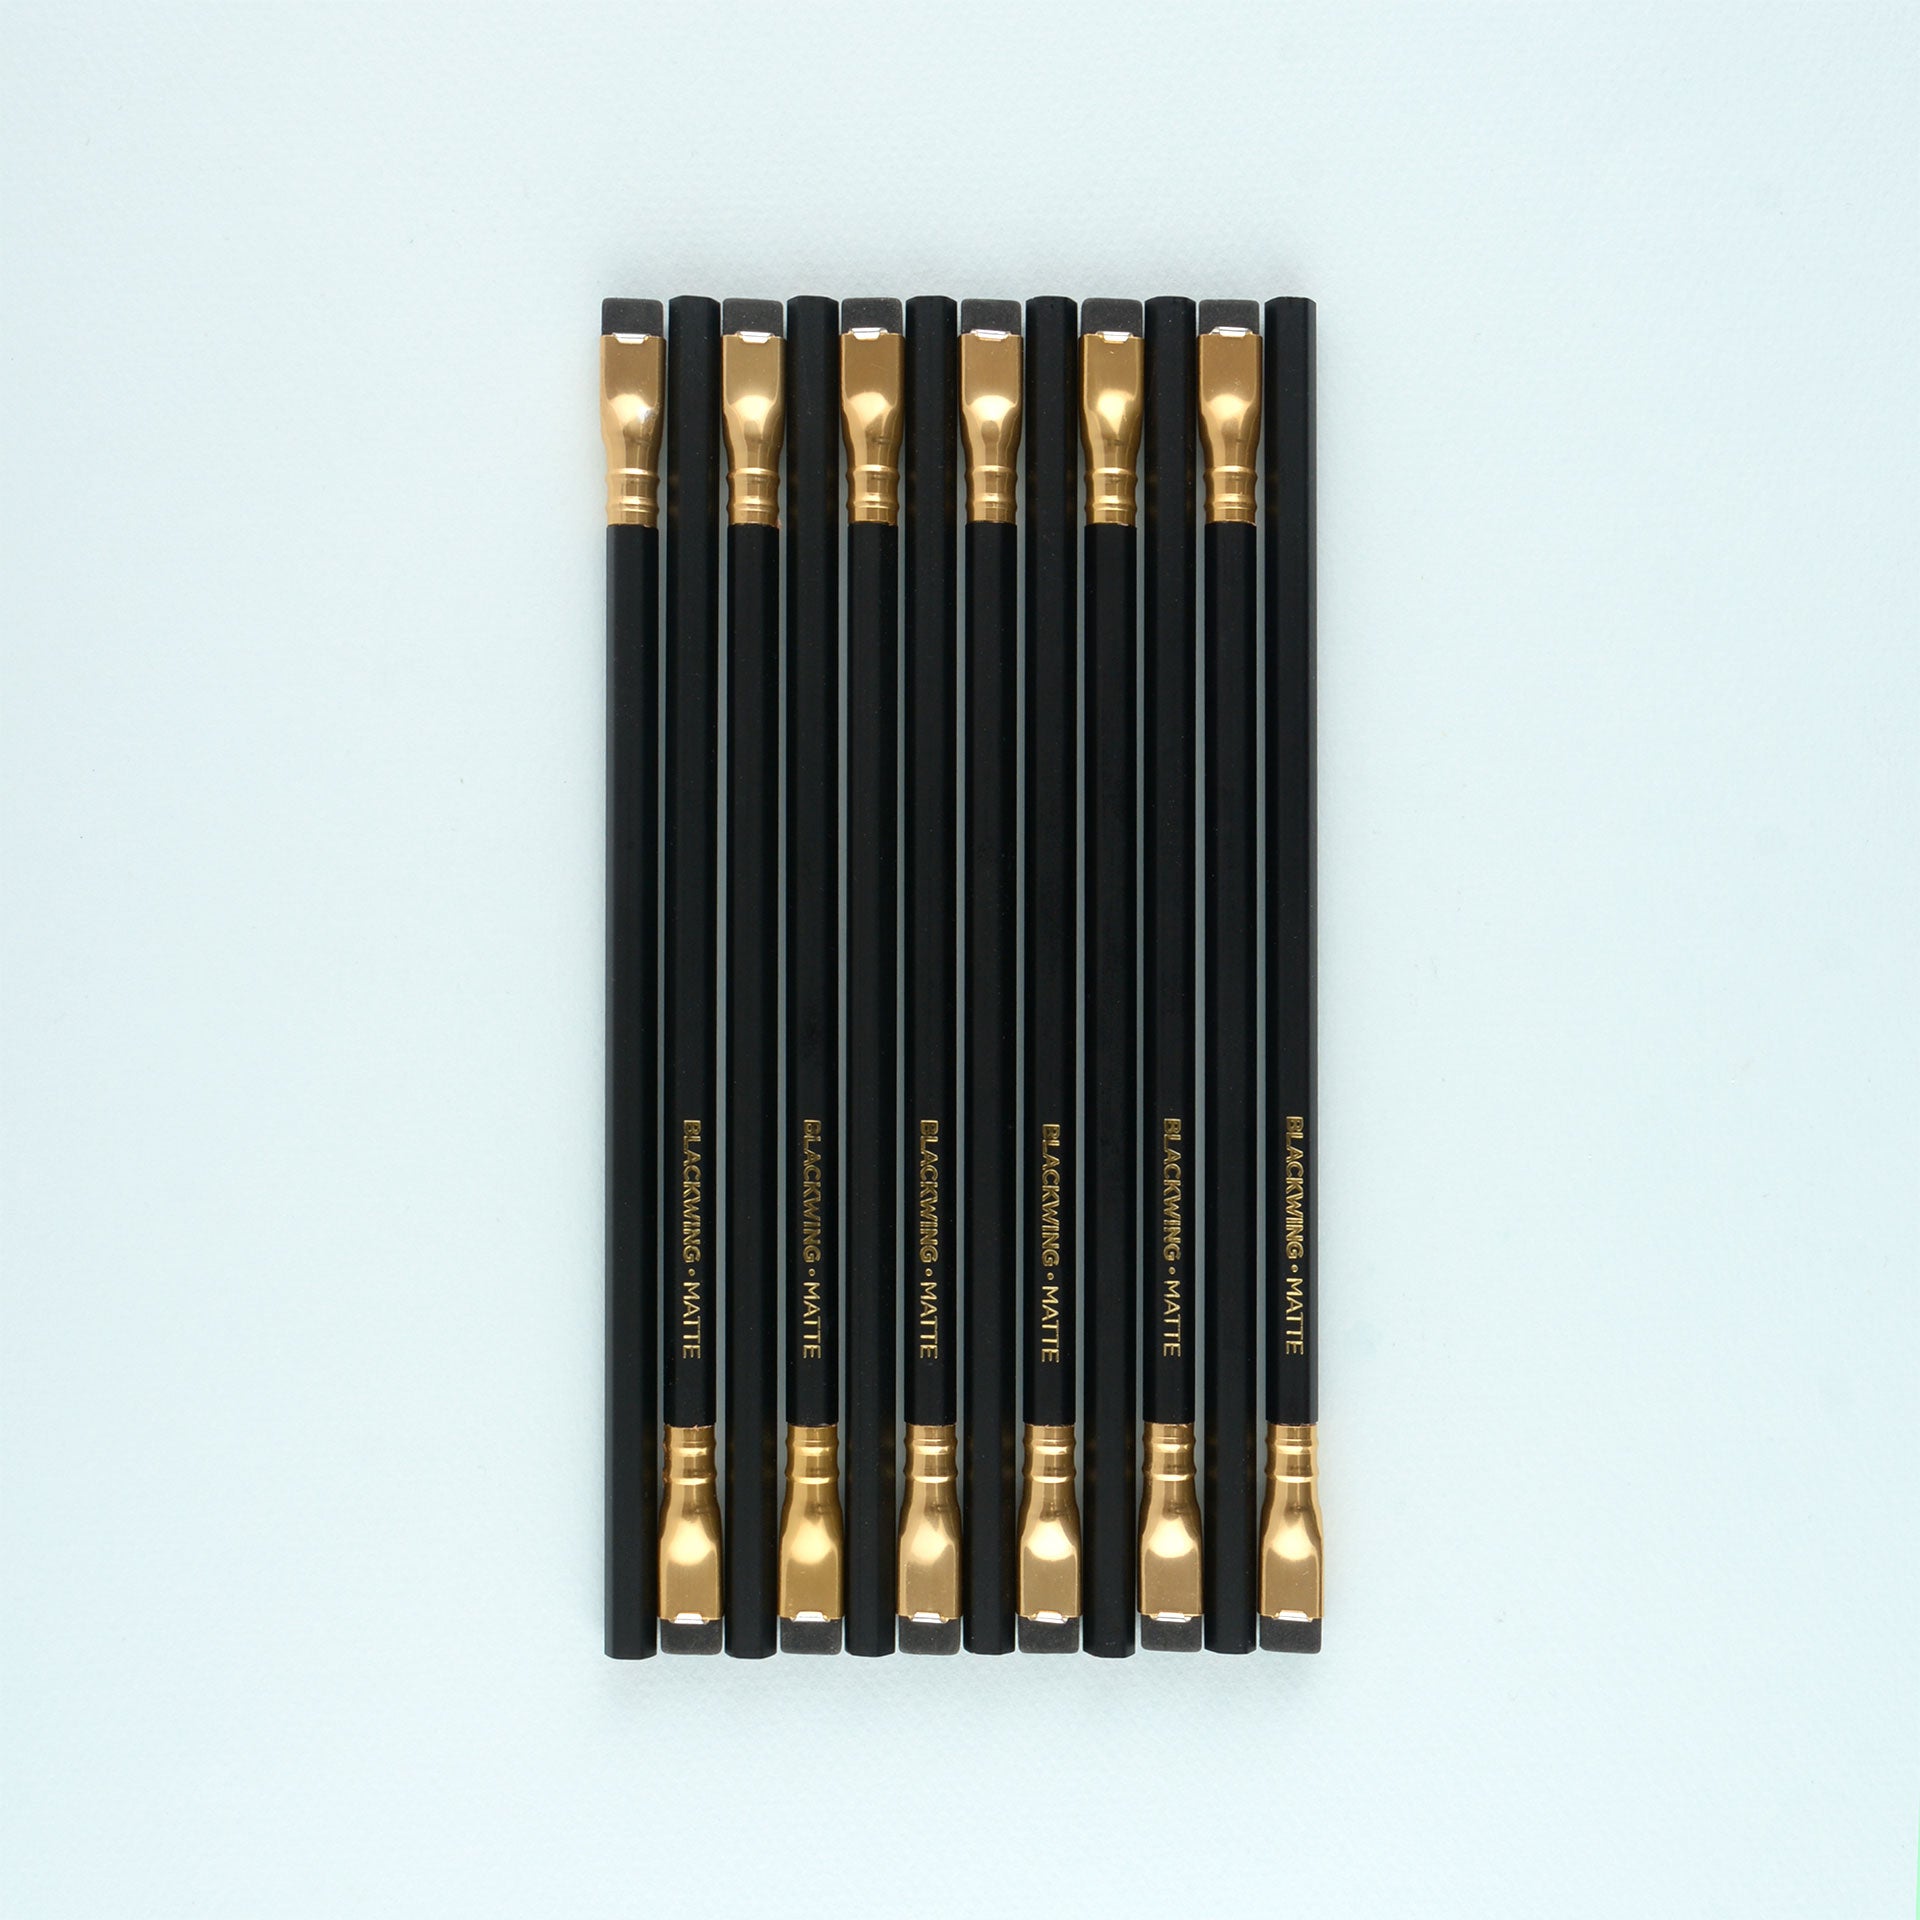 Blackwing Matte Pencils